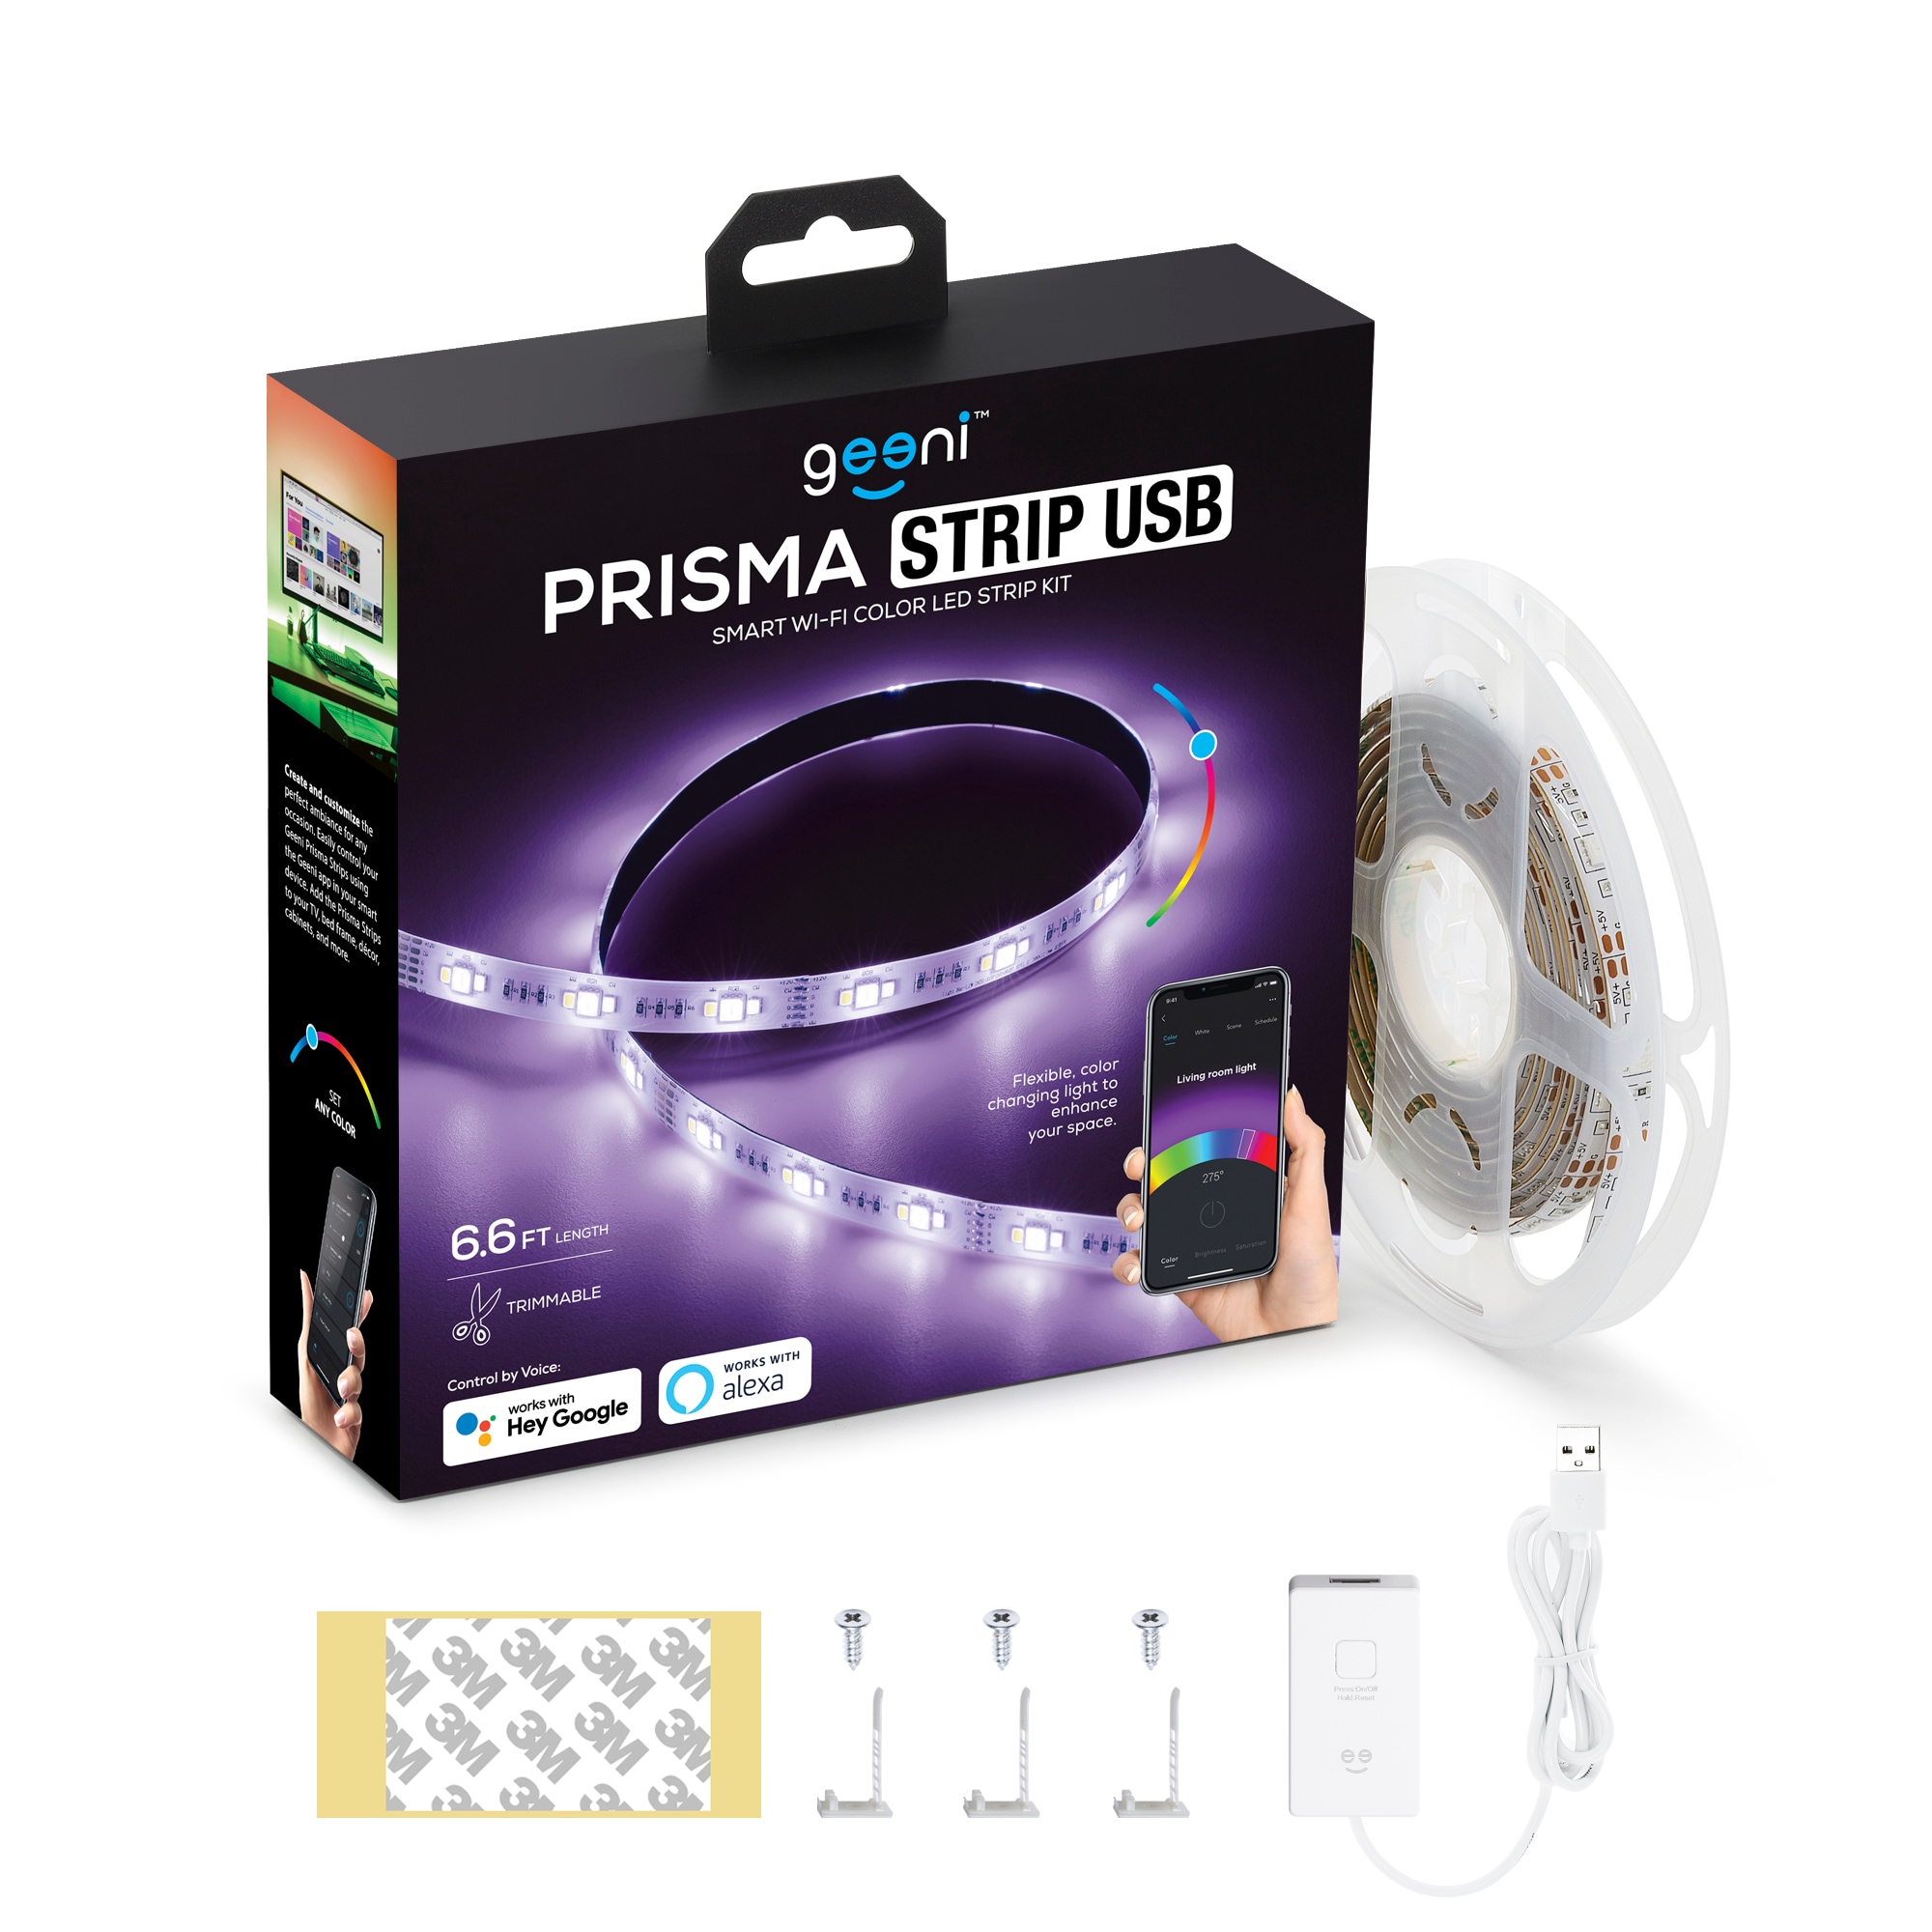 LED Under Cabinet Kitchen Closet Light Lamp 5v USB Cable LED Strip Bar Lamp Gift 